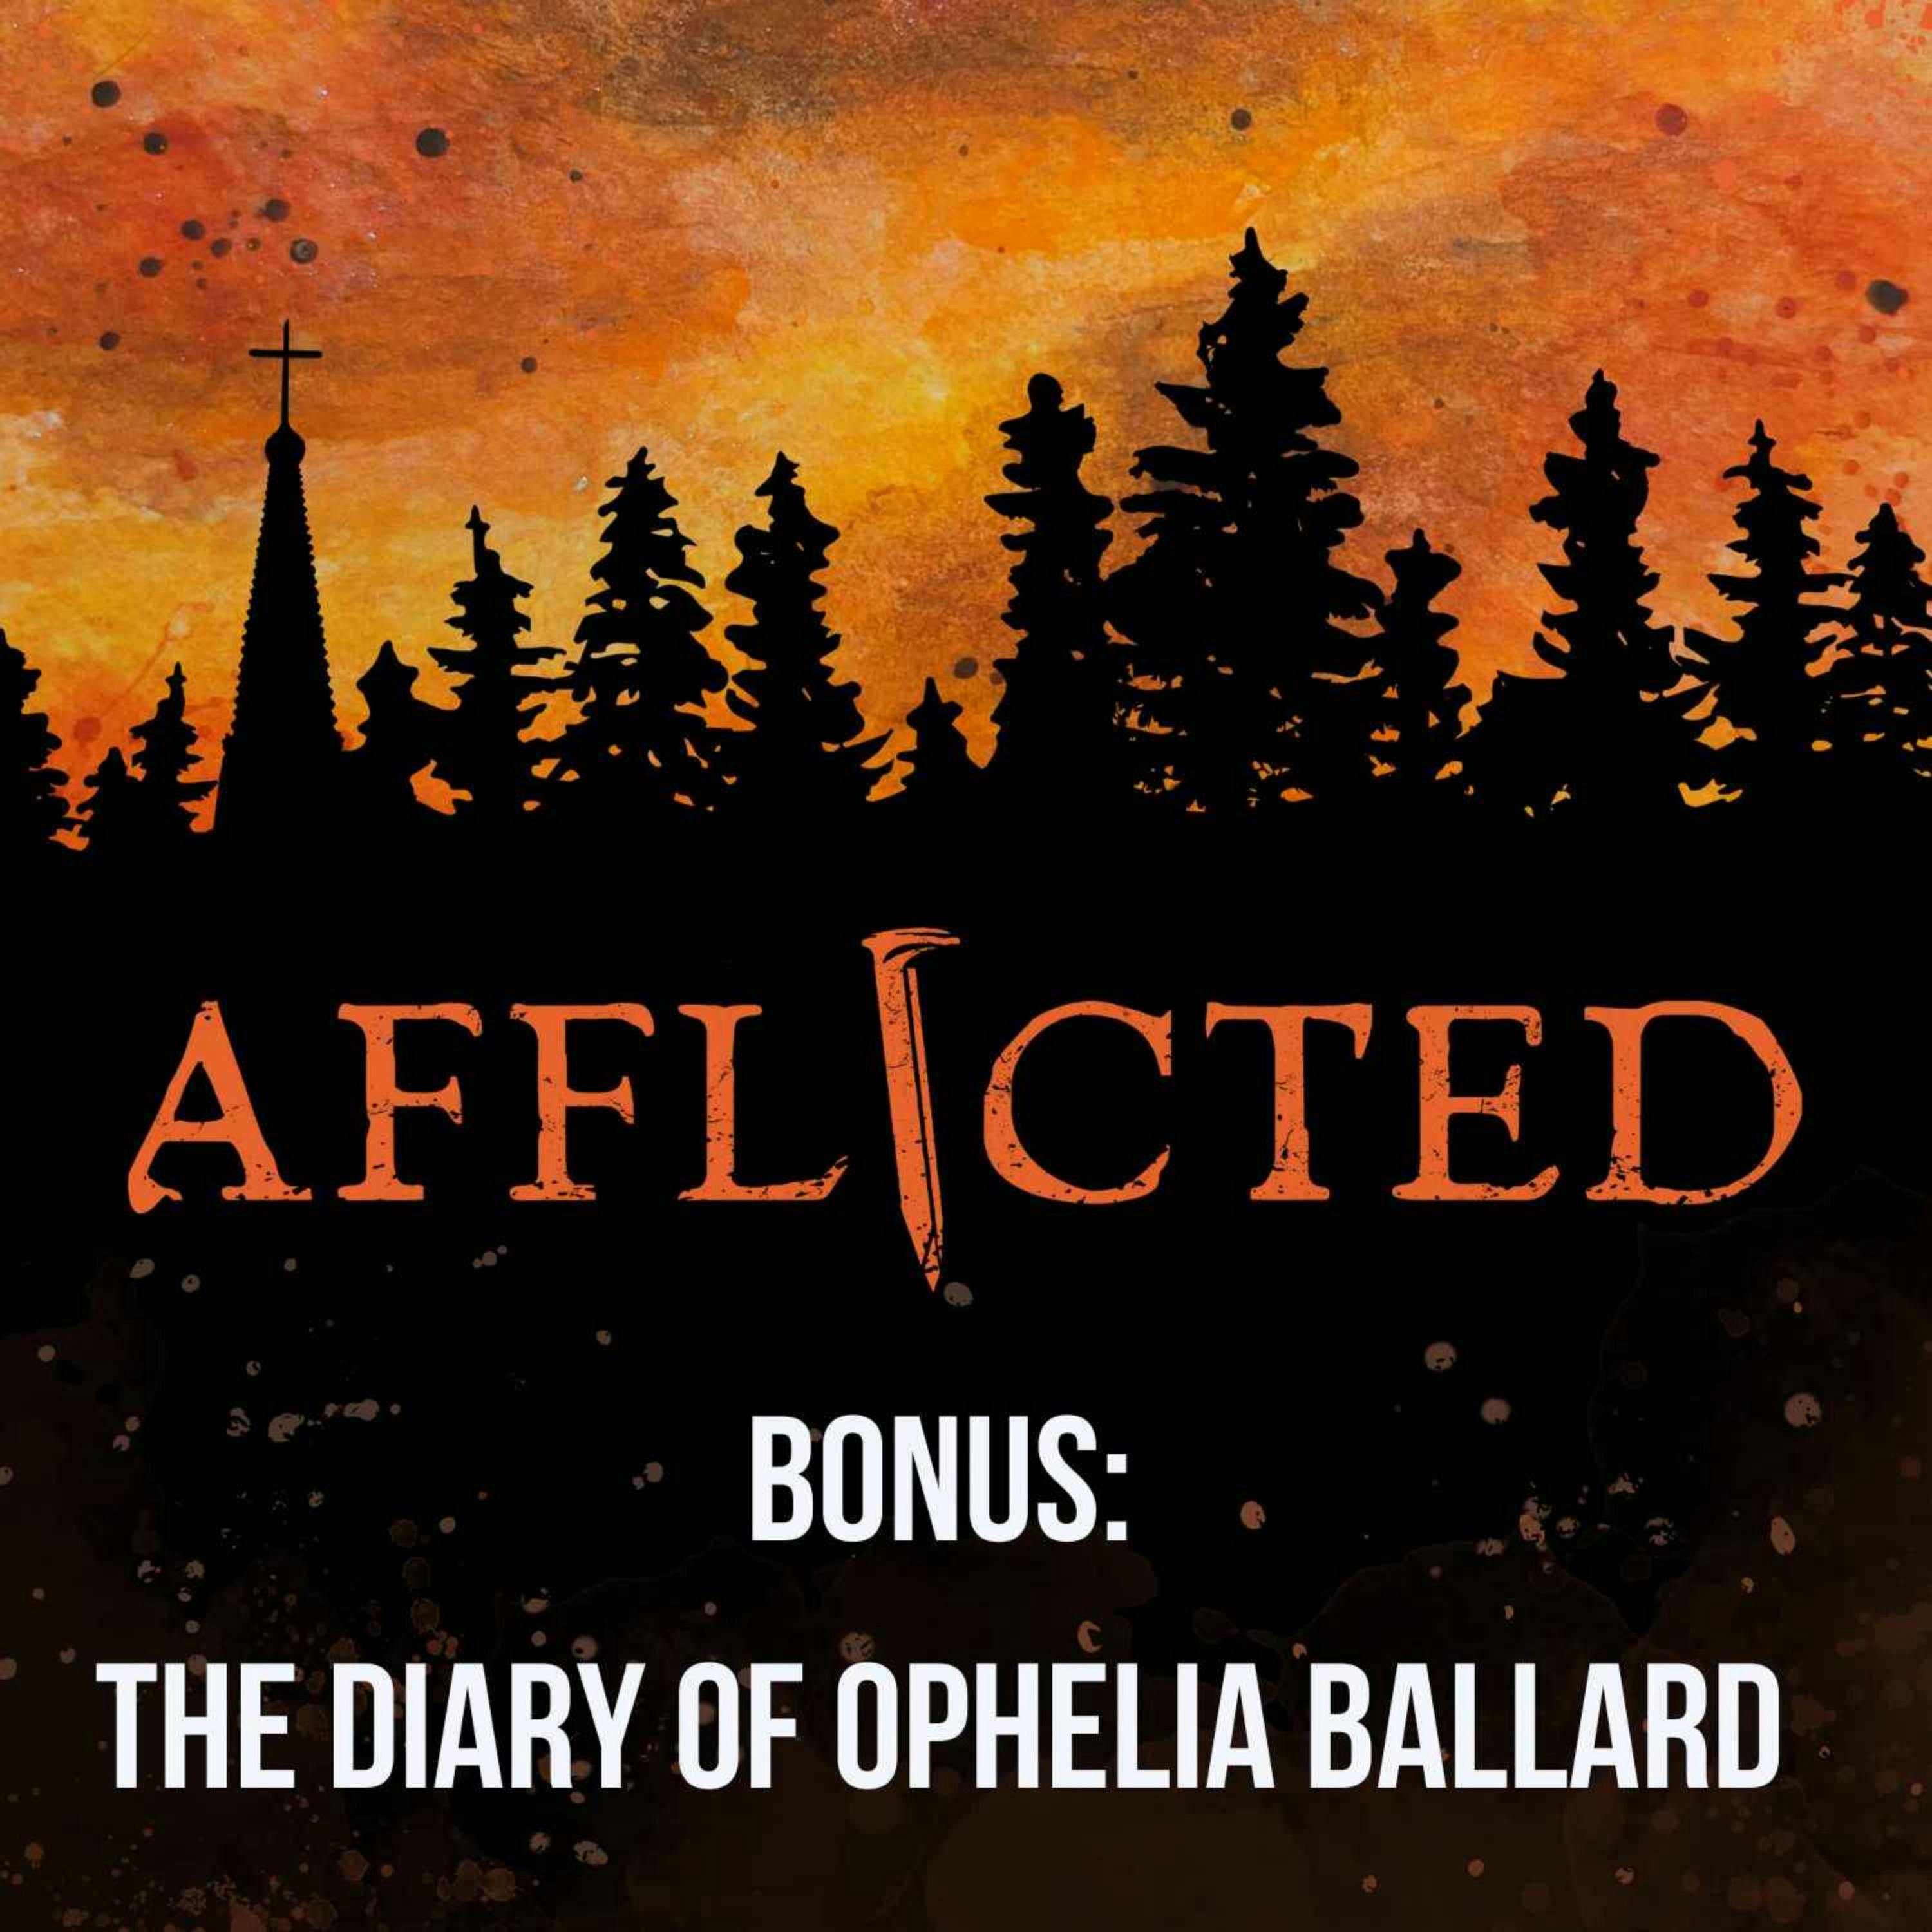 Bonus: The Diary of Ophelia Ballard